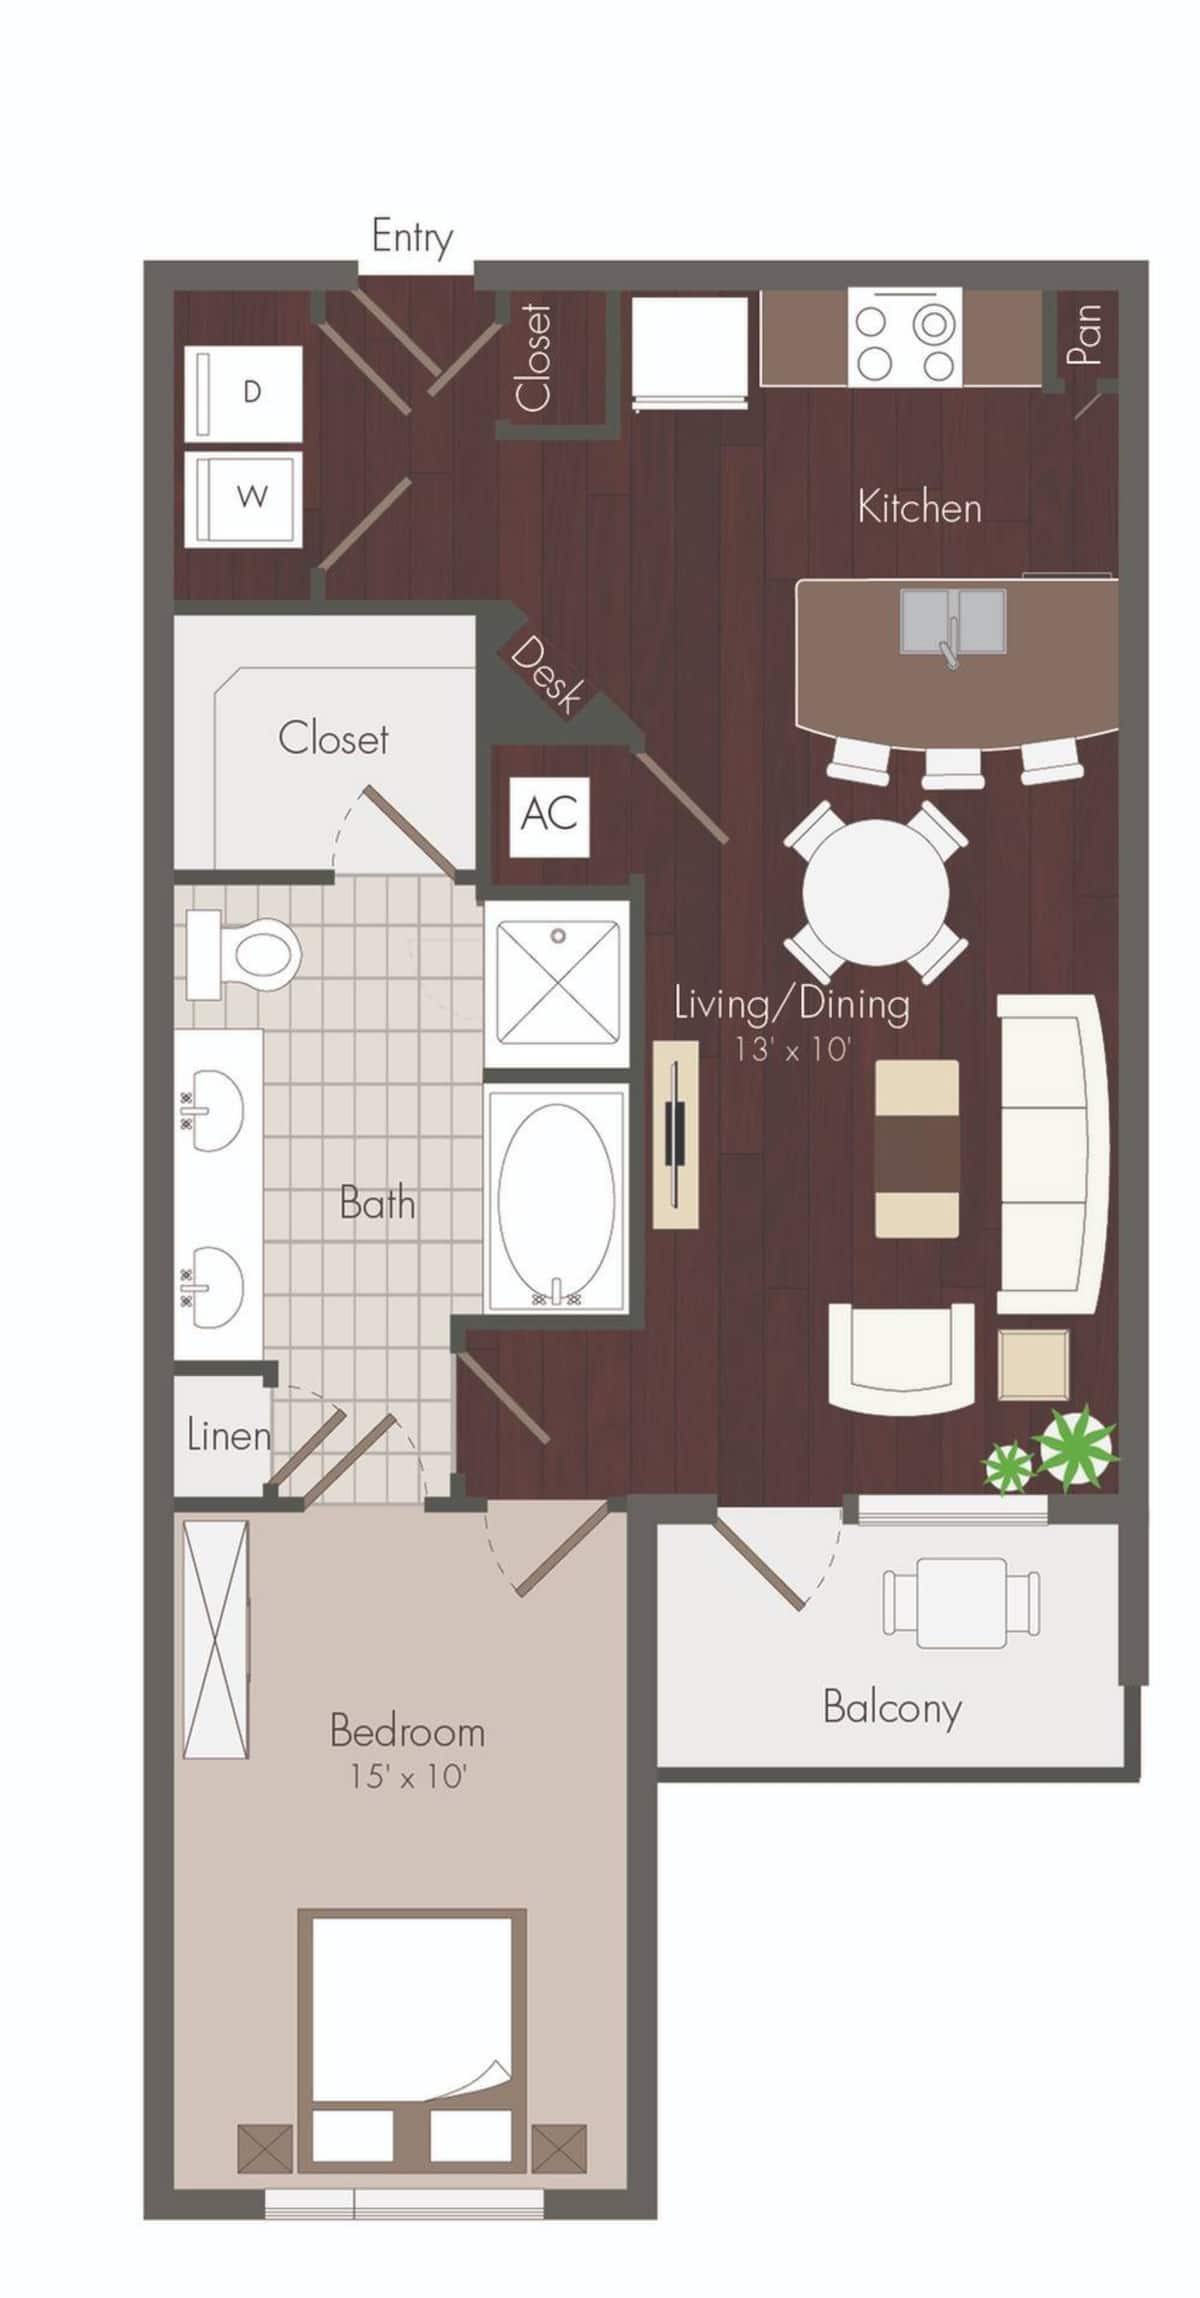 Floorplan diagram for Chandler, showing 1 bedroom